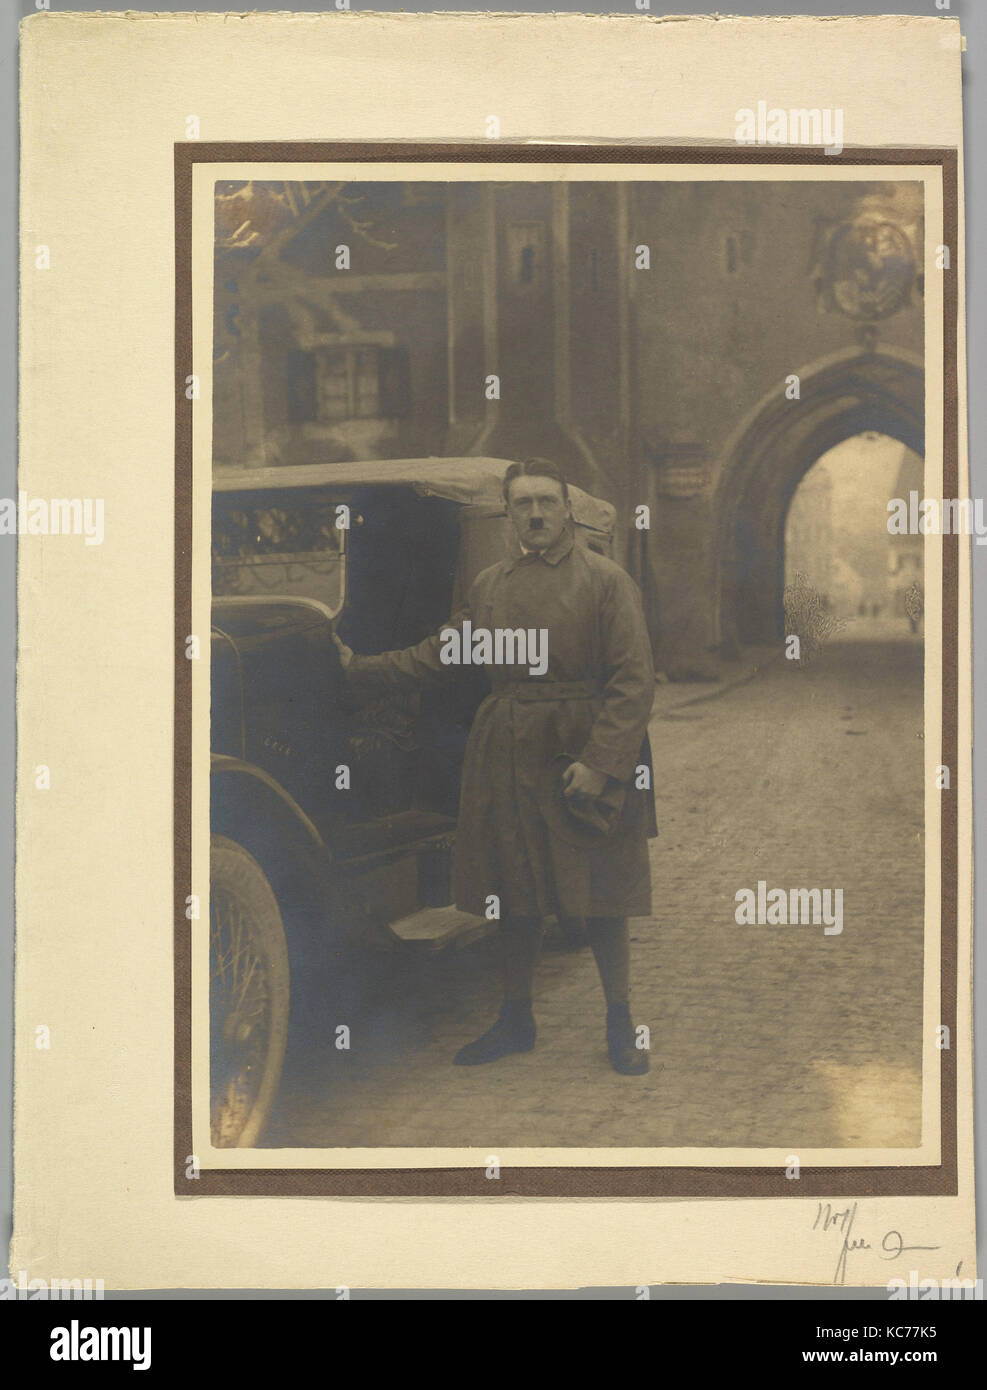 Adolph Hitler lasciando Landsberg prigione, Heinrich Hoffmann, Dicembre 20, 1924 Foto Stock